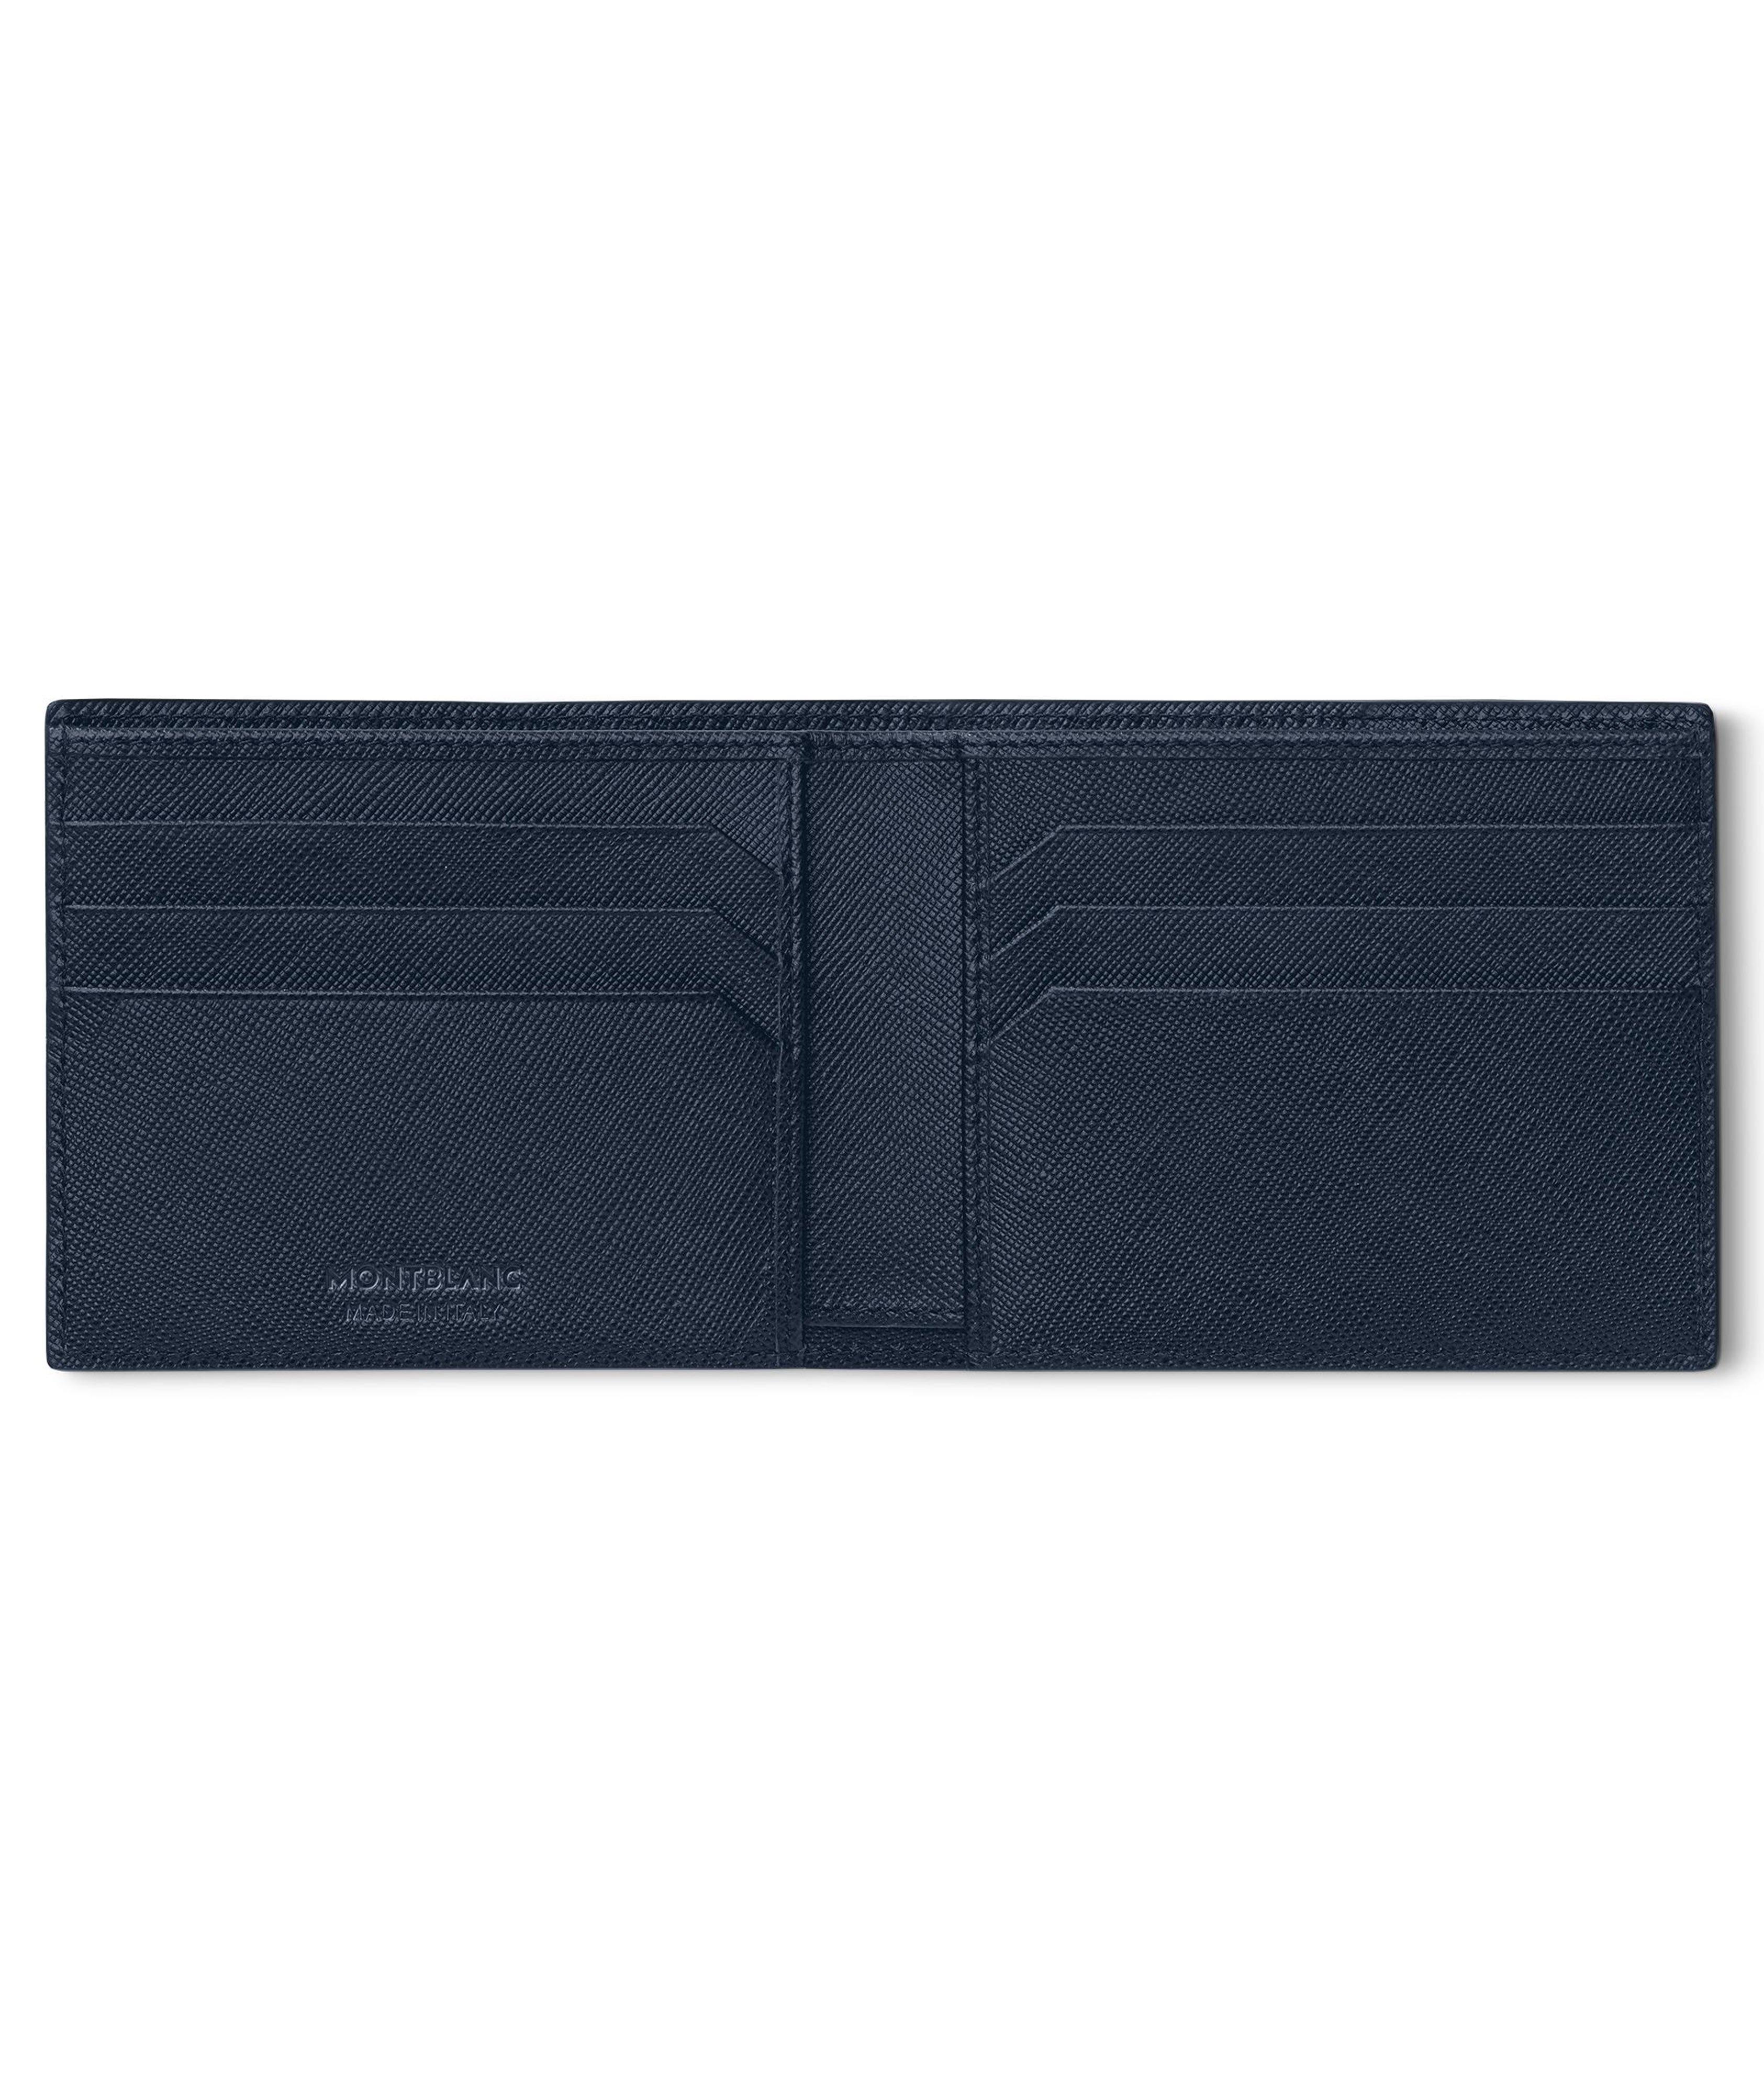 Montblanc Sartorial Leather Wallet | Wallets | Harry Rosen